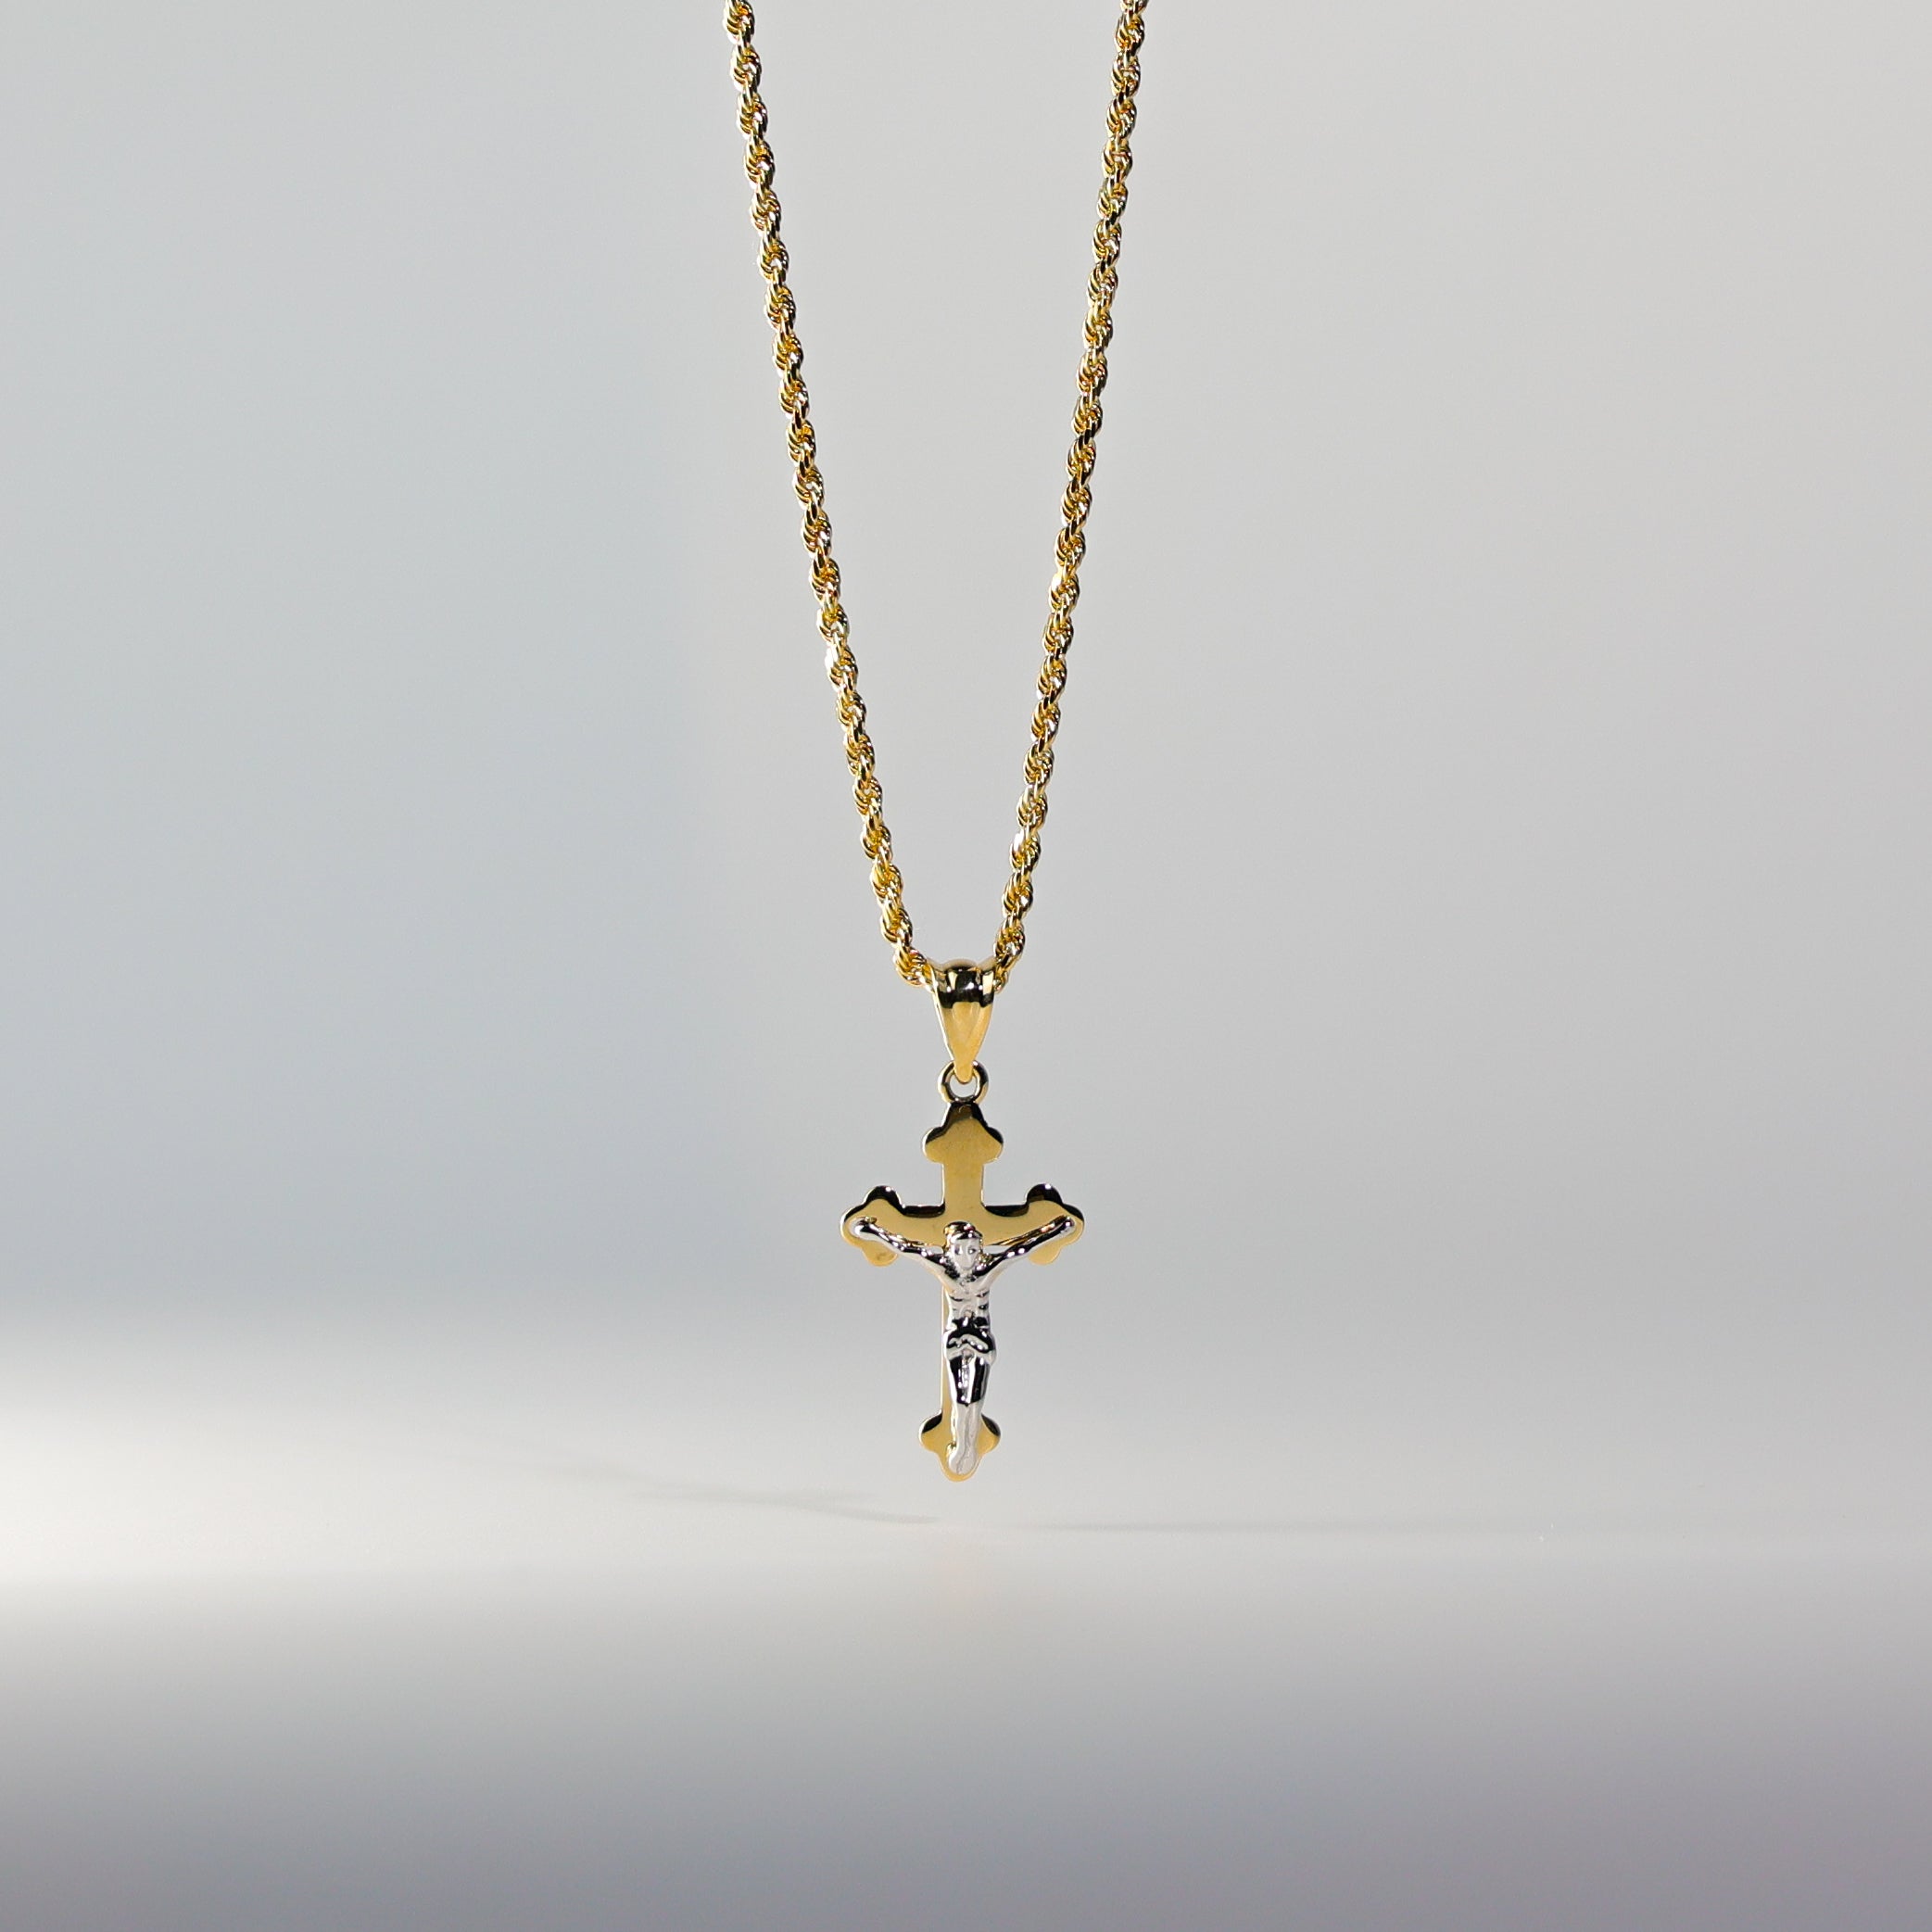 Gold Jesus Crucifix Cross Pendant Model-2531 - Charlie & Co. Jewelry